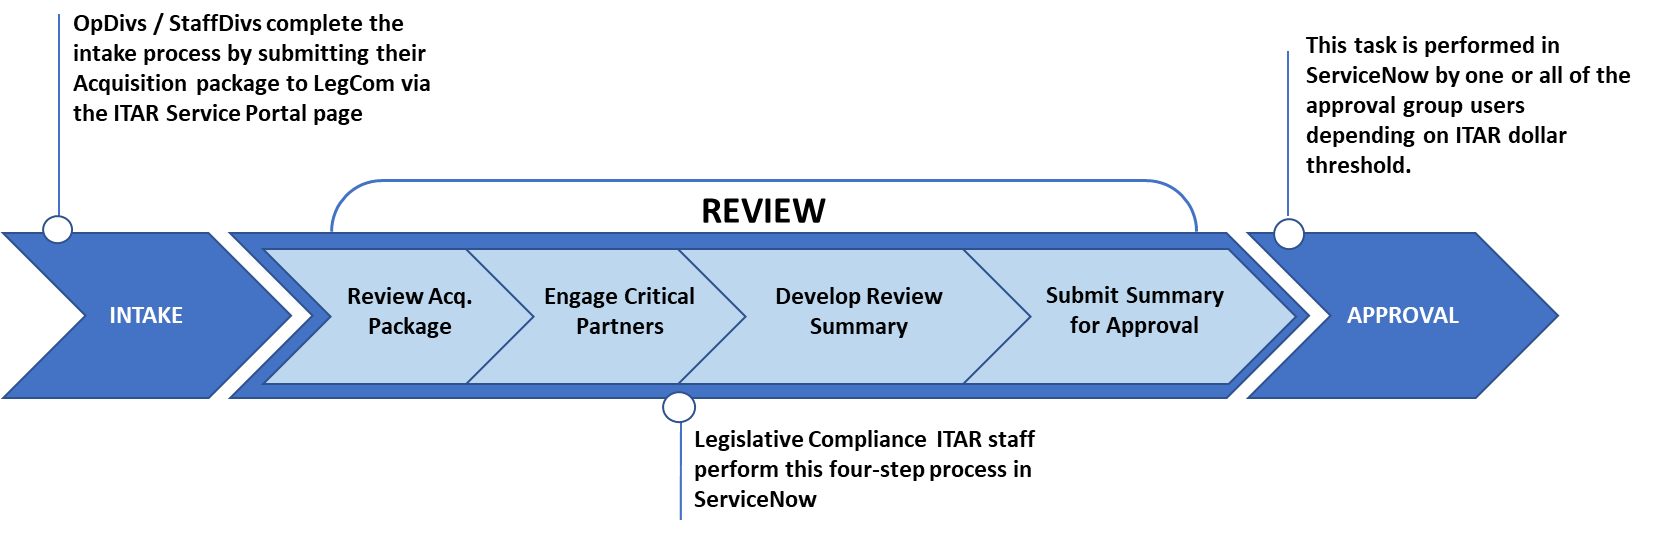 Figure 6: ITAR Reviewer Process Steps